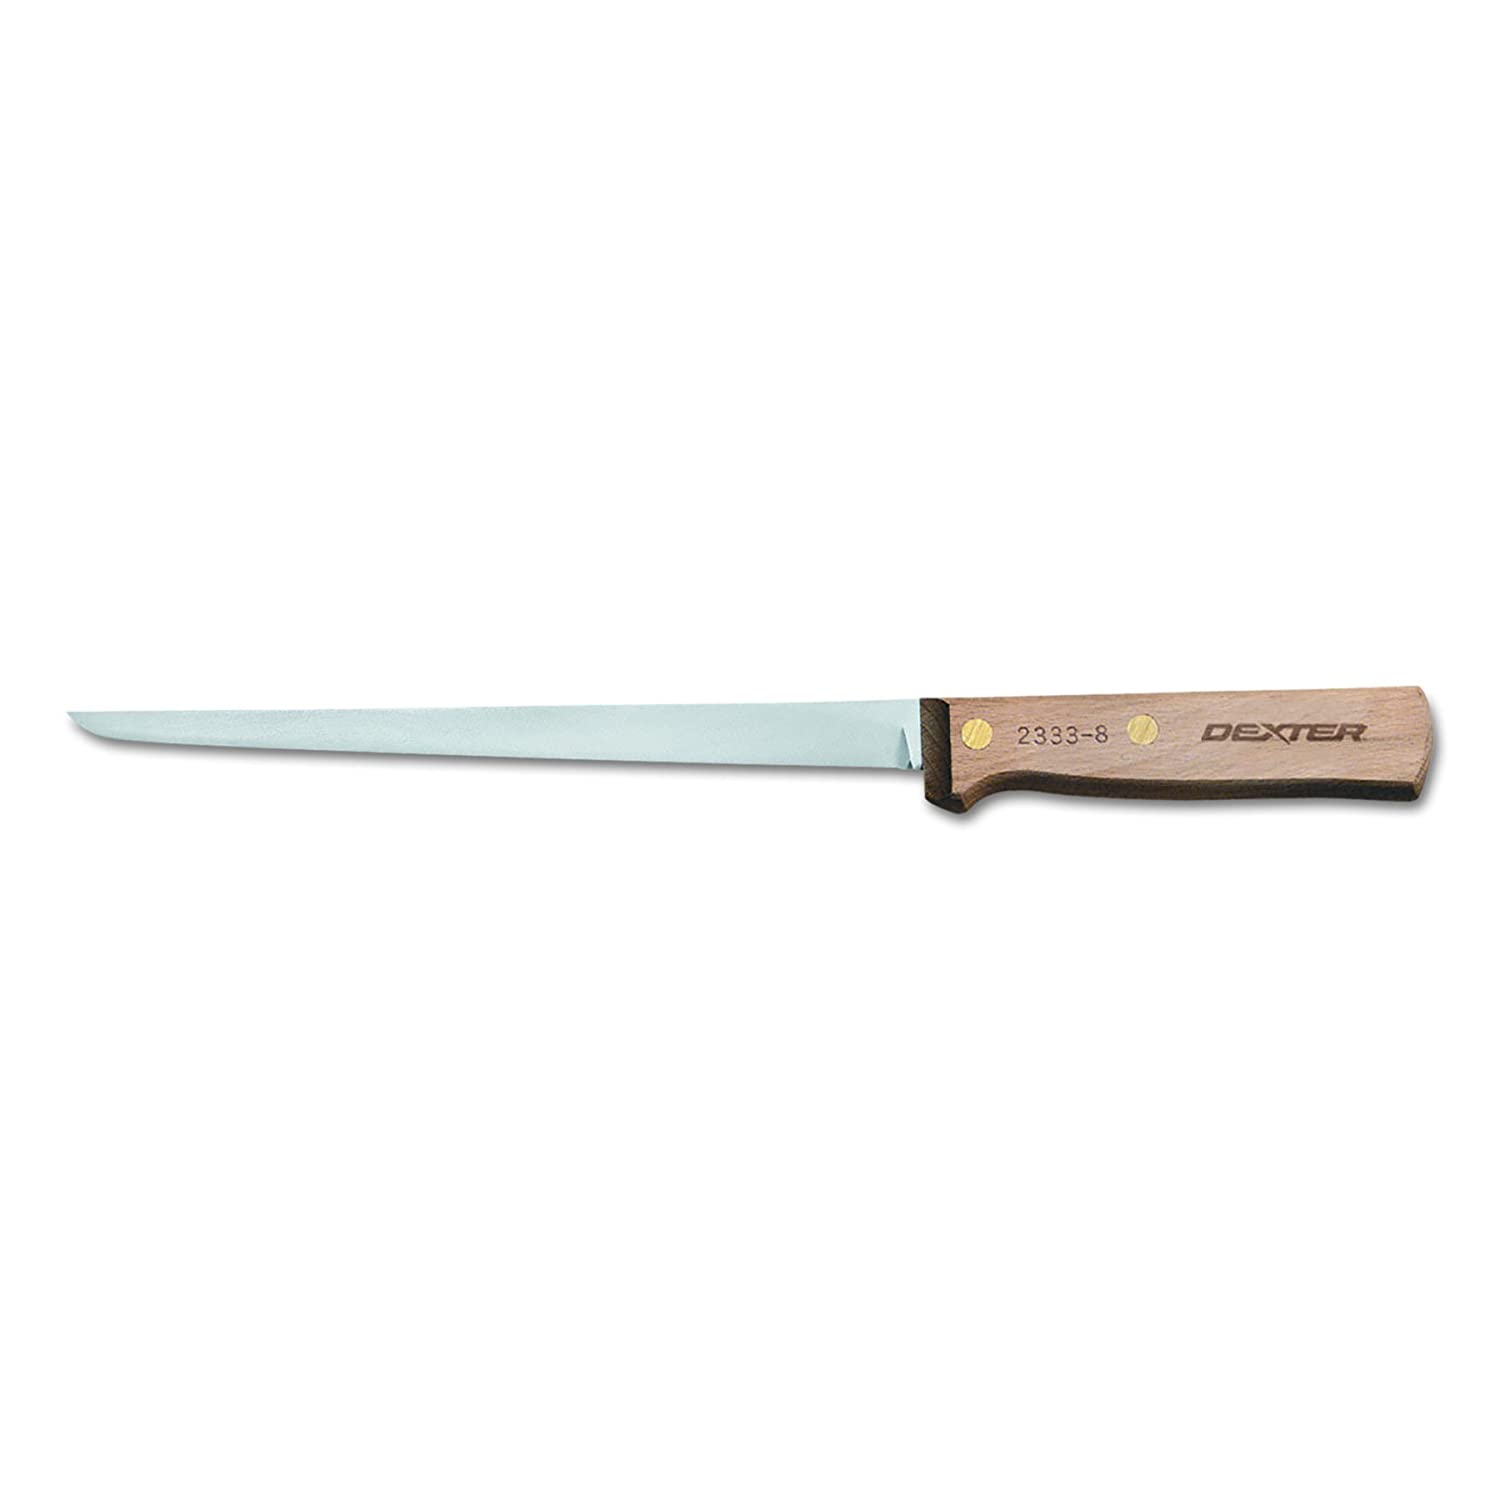 Dexter-Russell 8" Traditional Fillet Knife